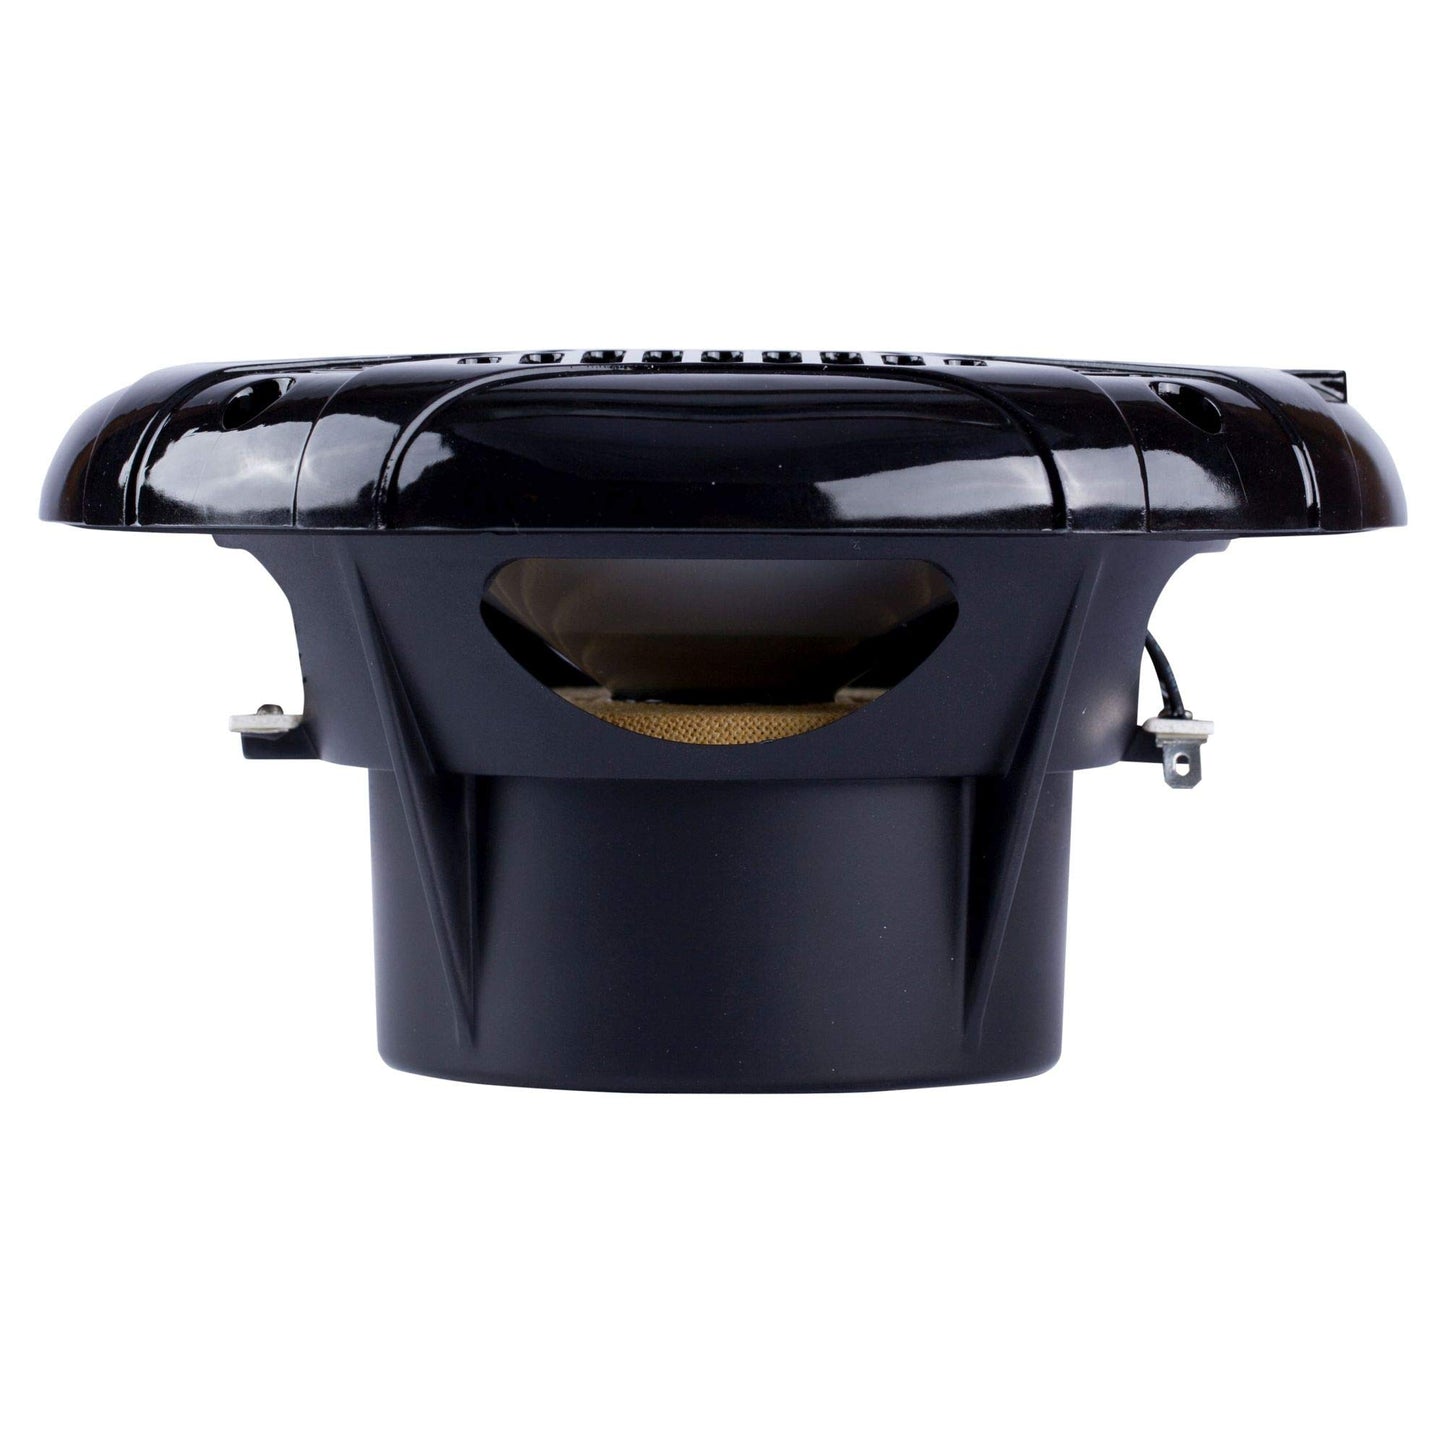 Memphis MXA602SLB 6.5" LED Coaxial Speaker - Black